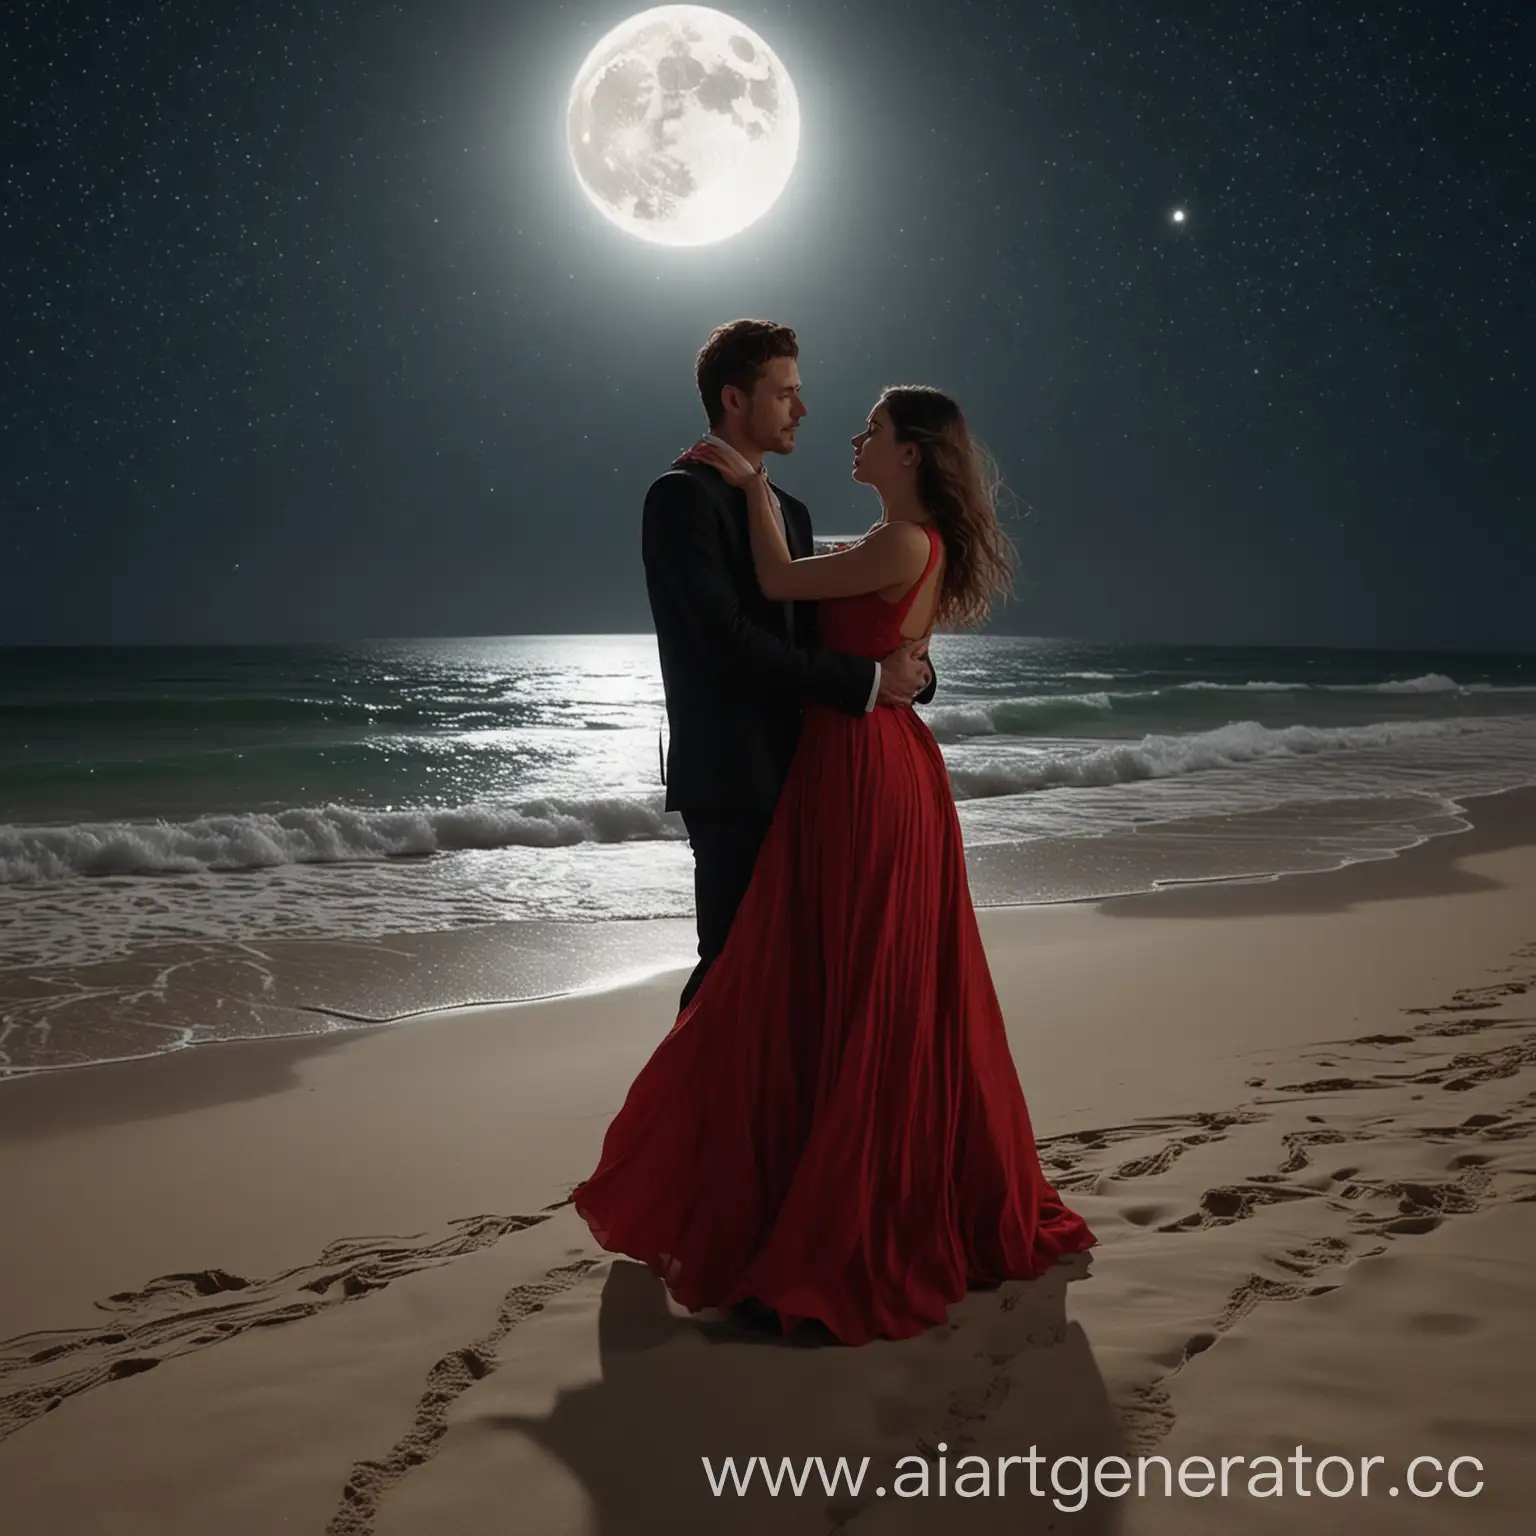 Romantic-Couple-Dancing-under-Starry-Night-on-Sandy-Beach